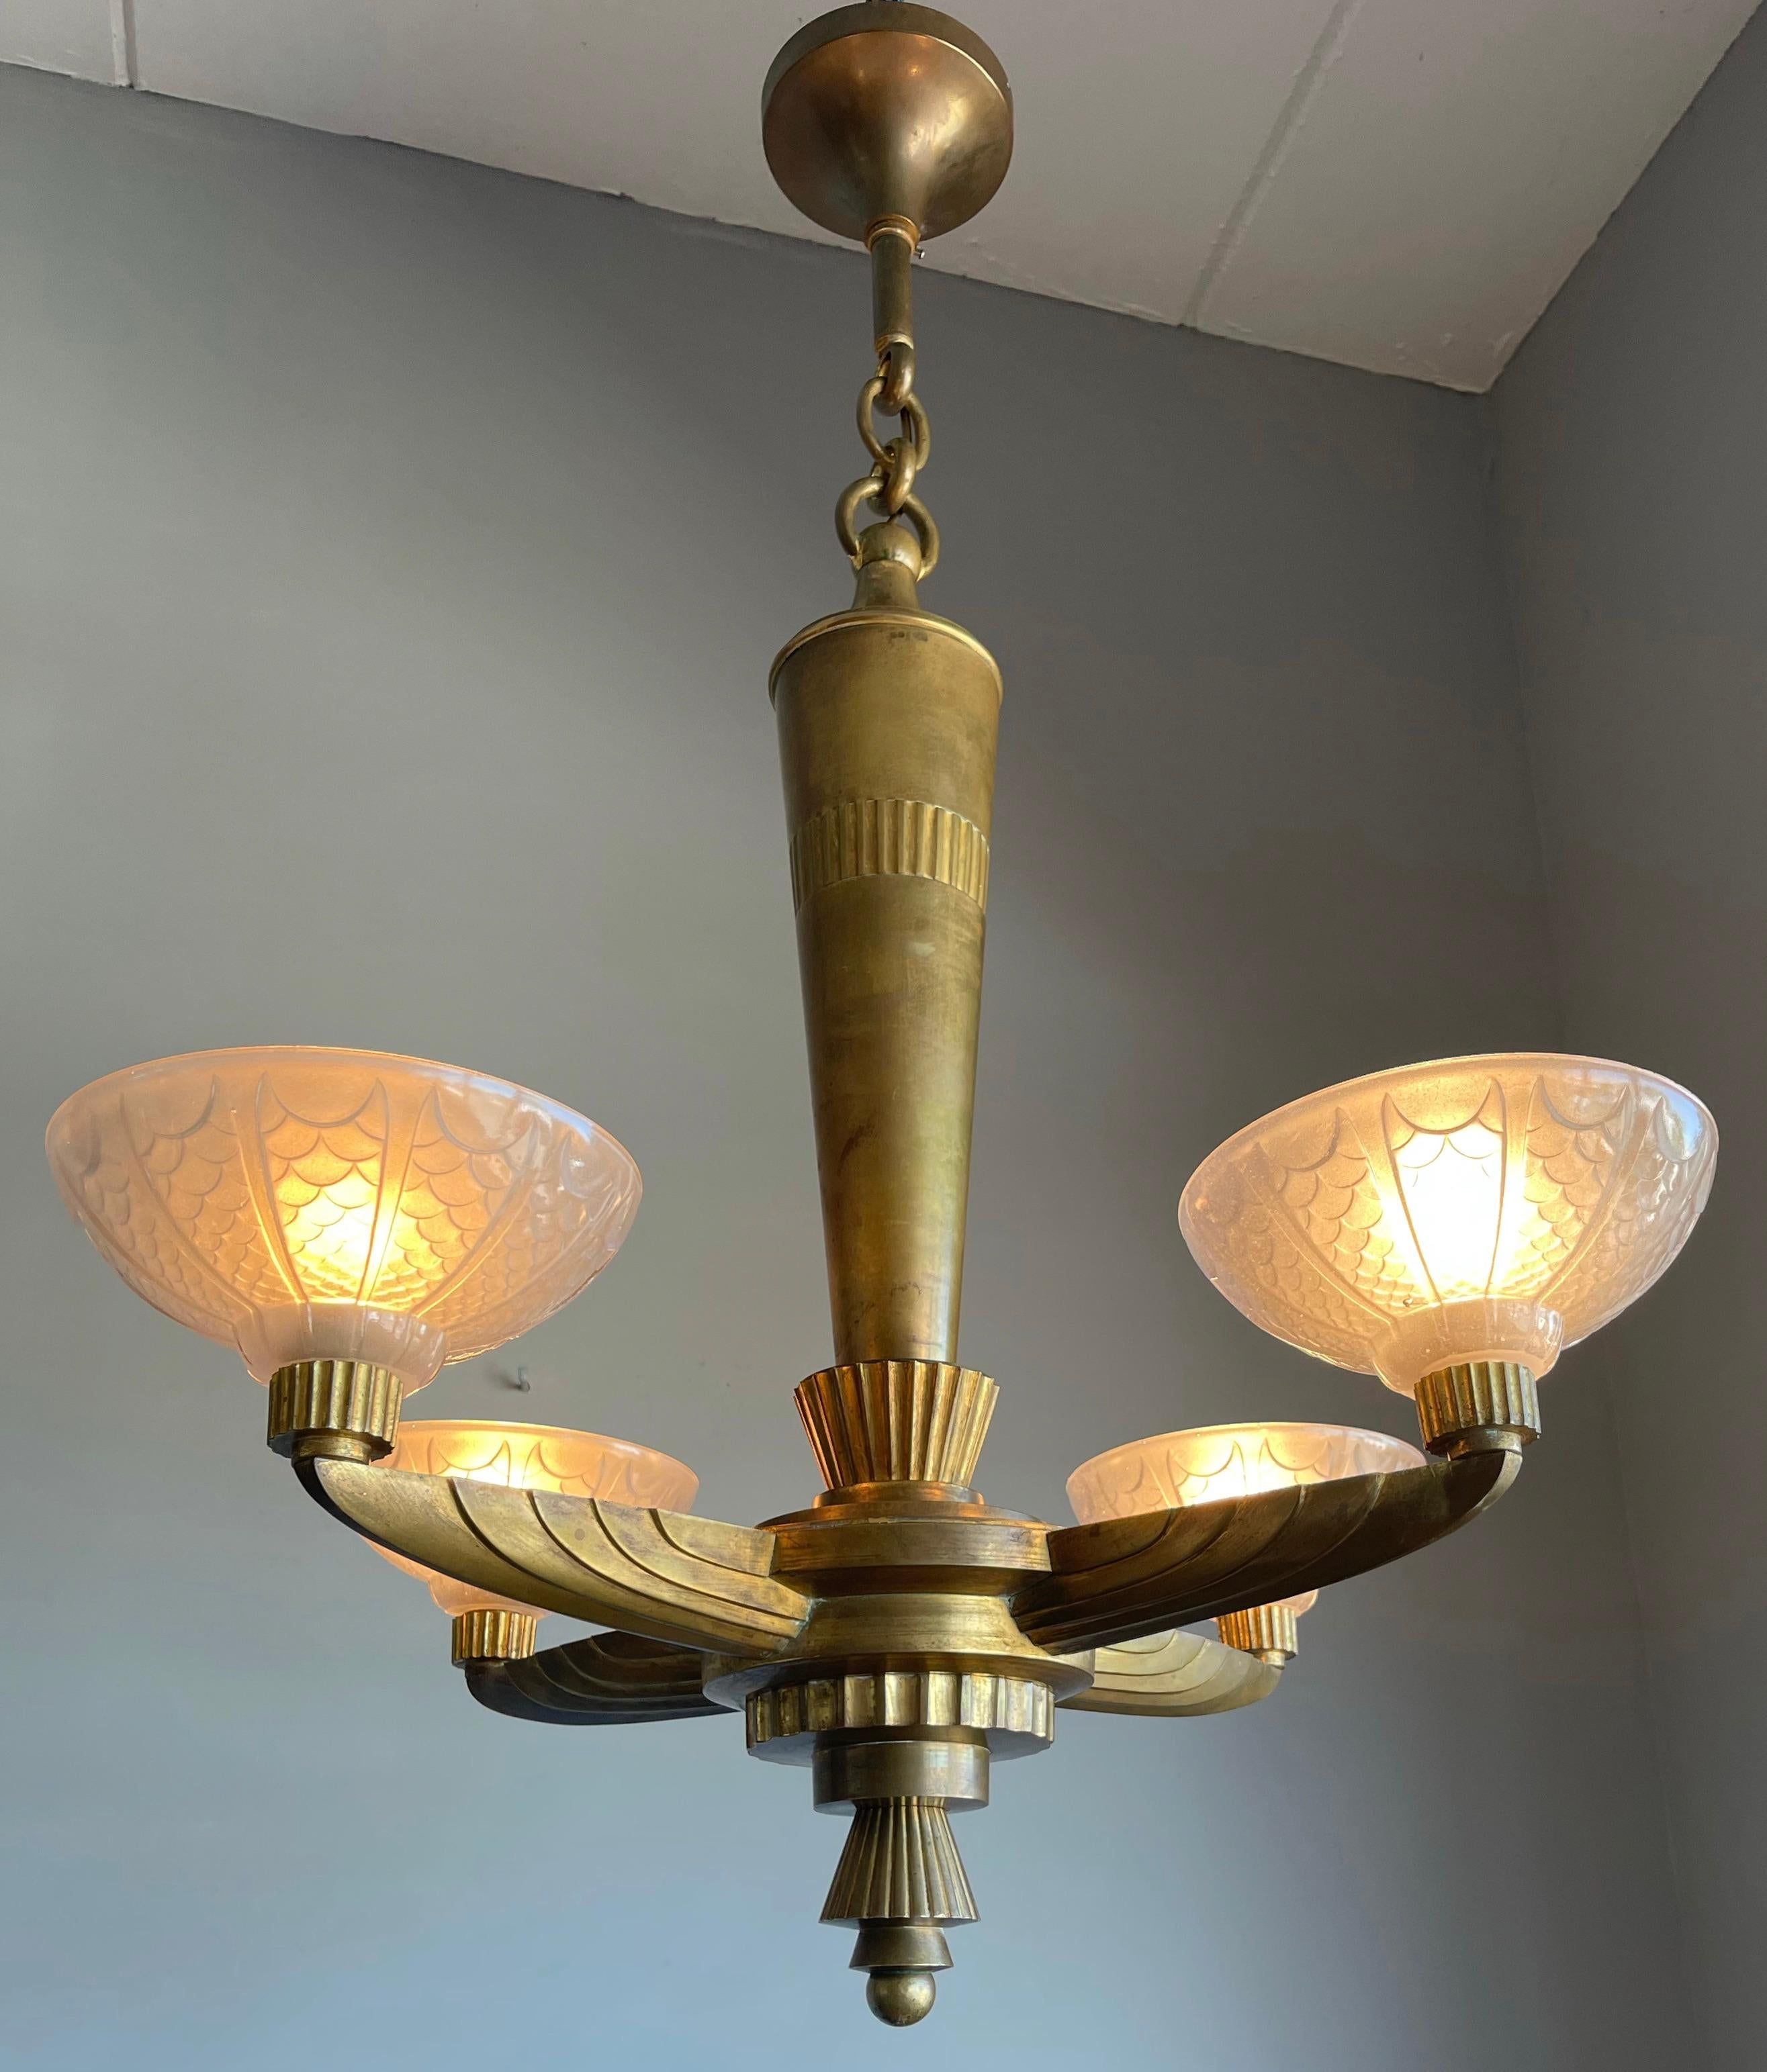 1920s ceiling fan with light